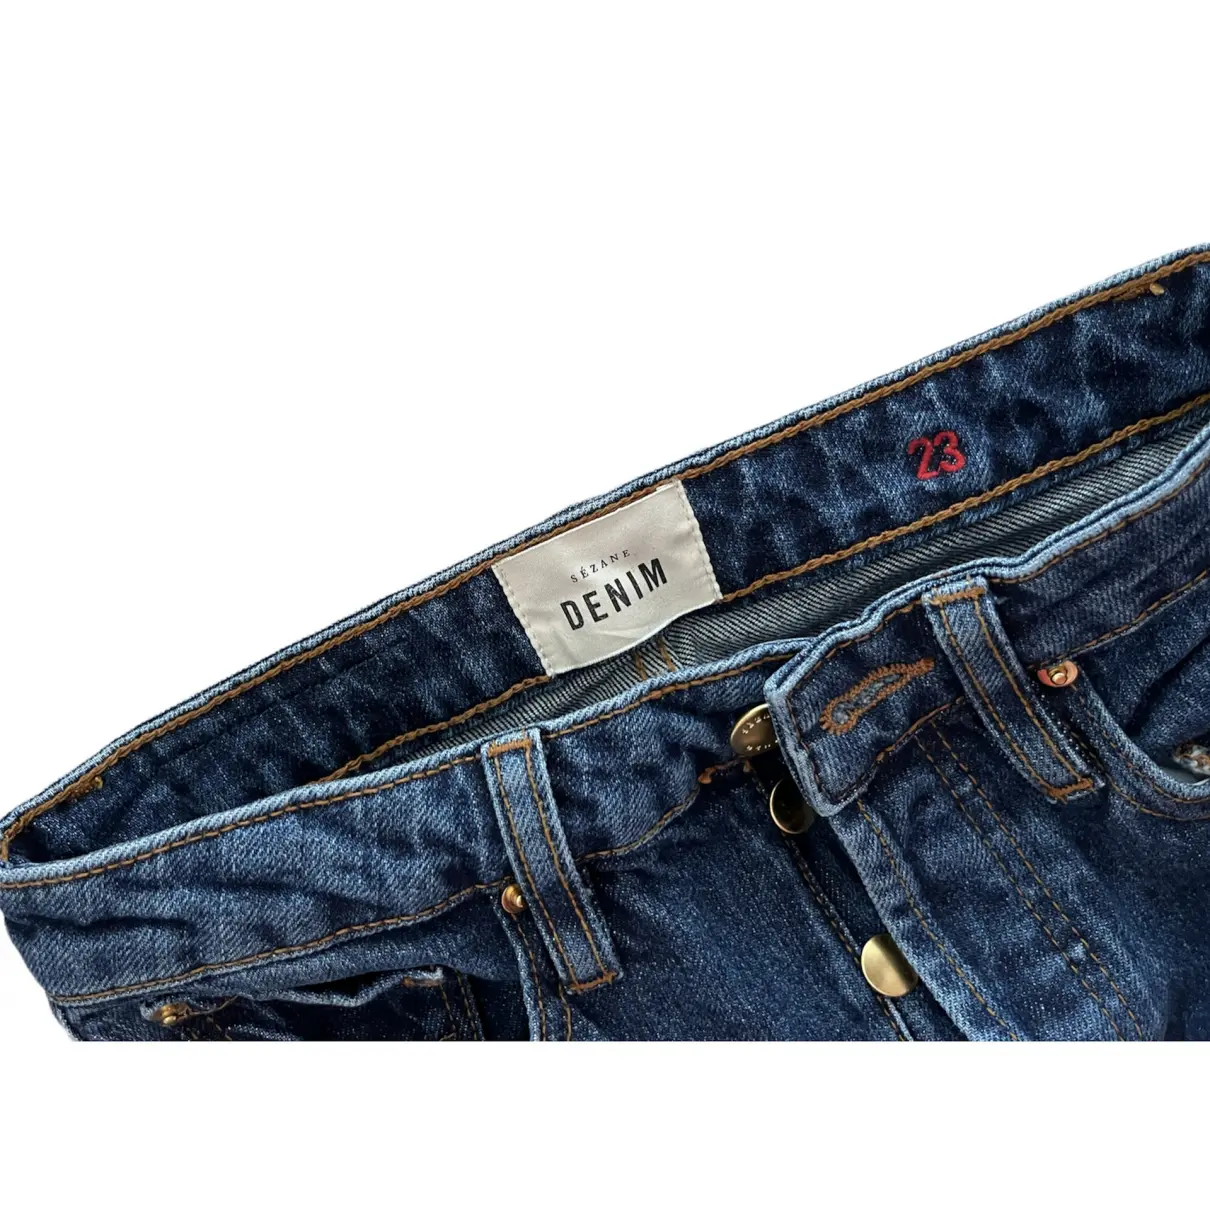 Buy Sézane Spring Summer 2020 slim jeans online